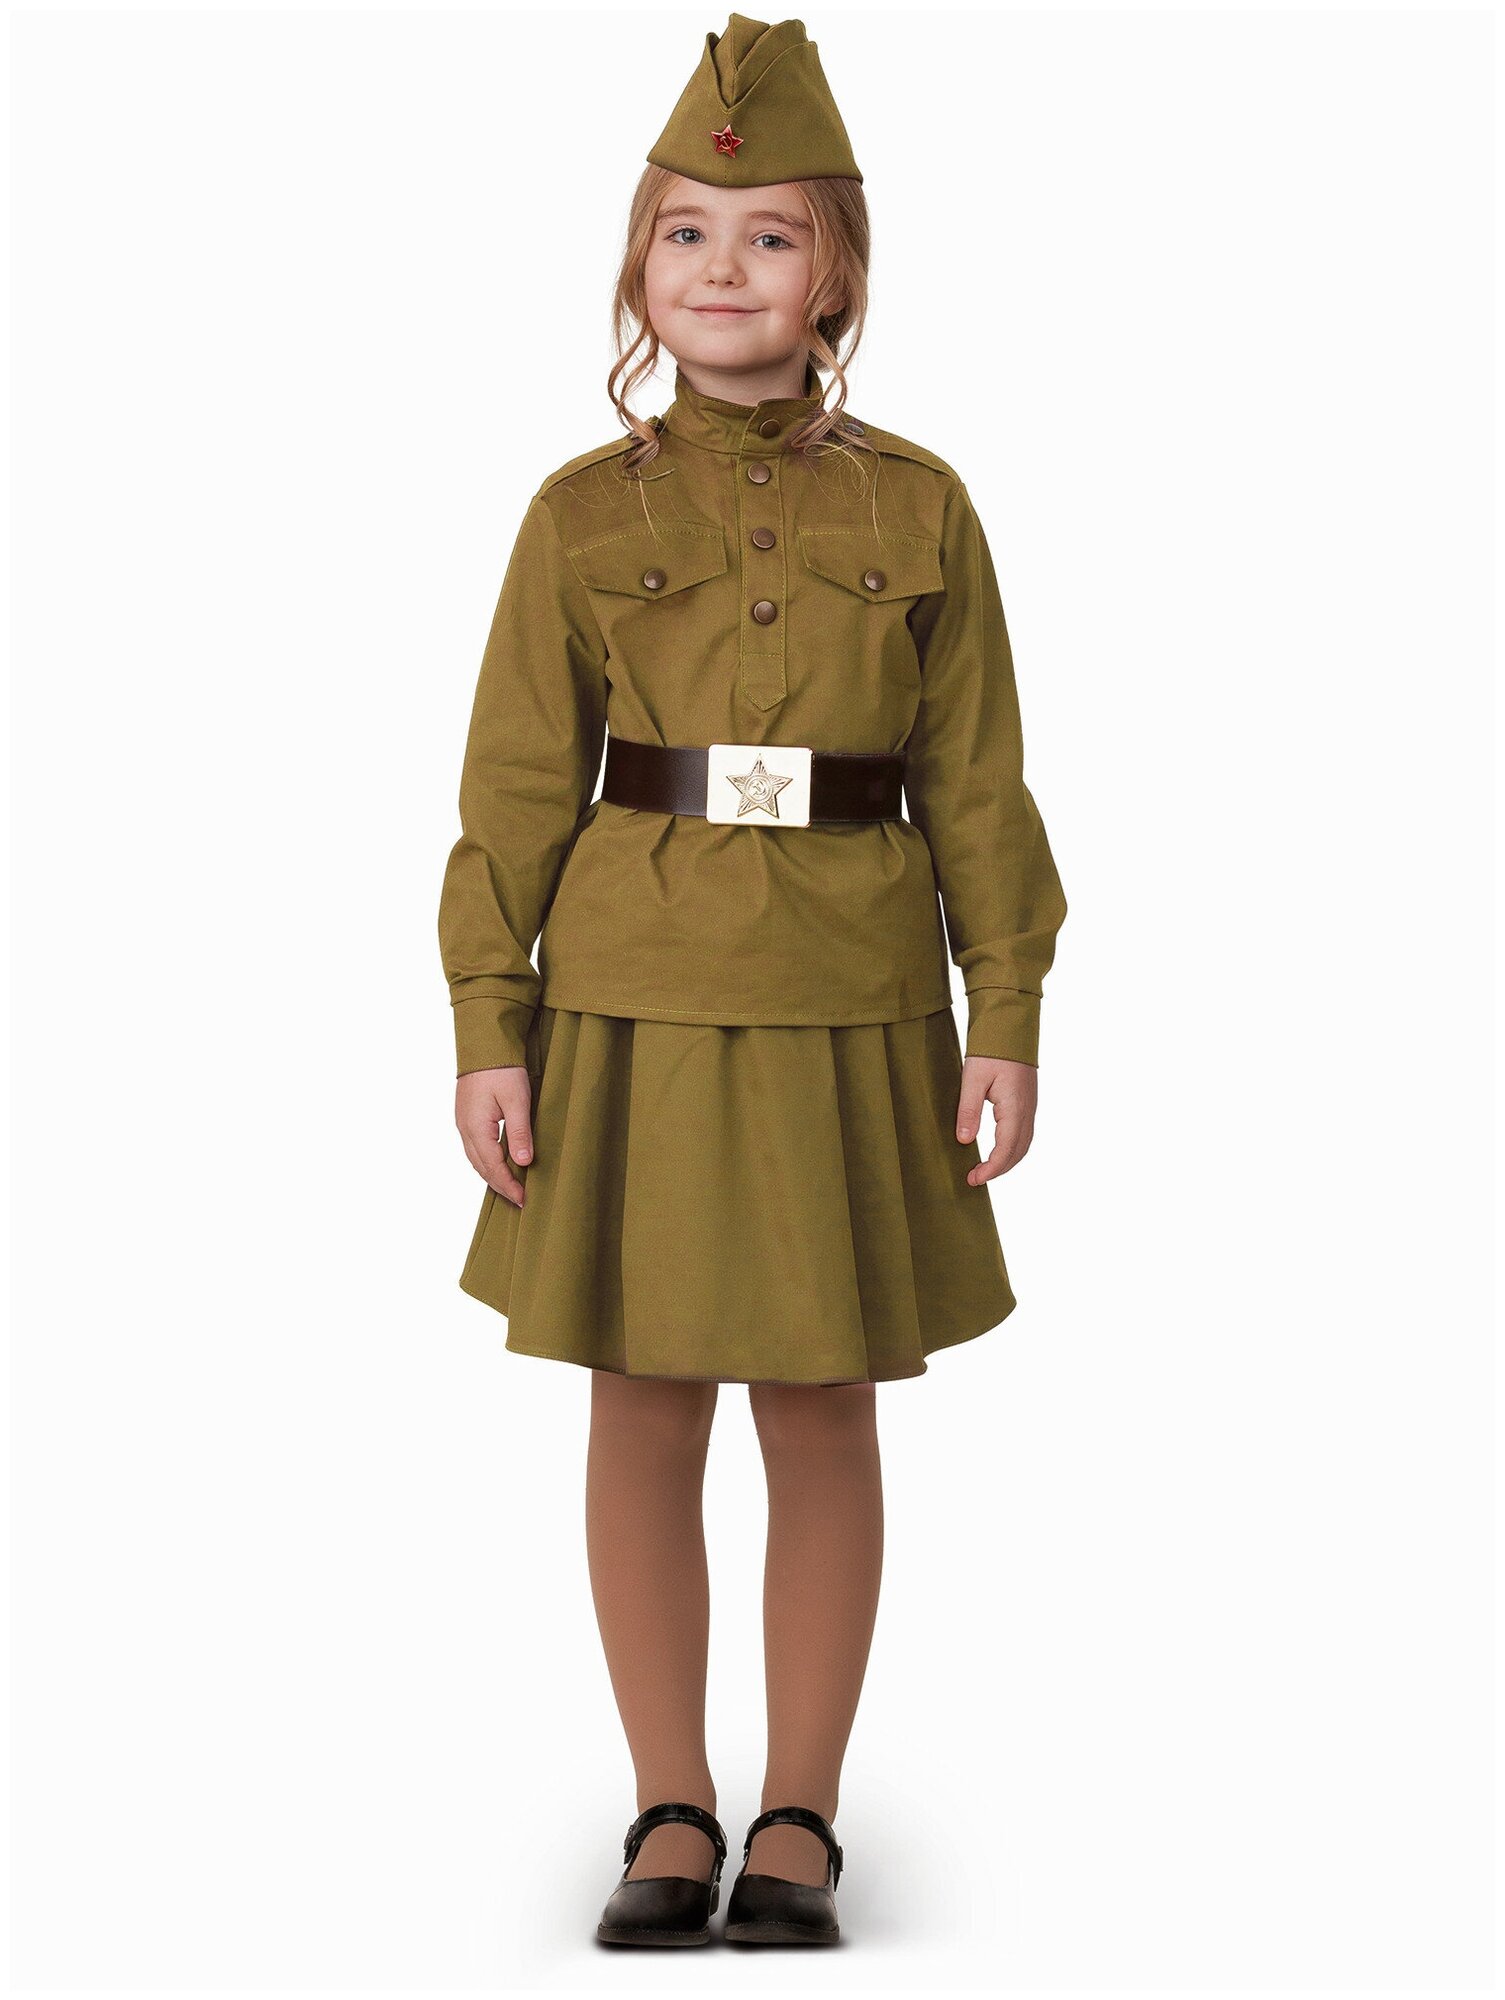 Костюм солдатка хлопок 100% (8009-3), размер 122, цвет мультиколор, бренд Батик